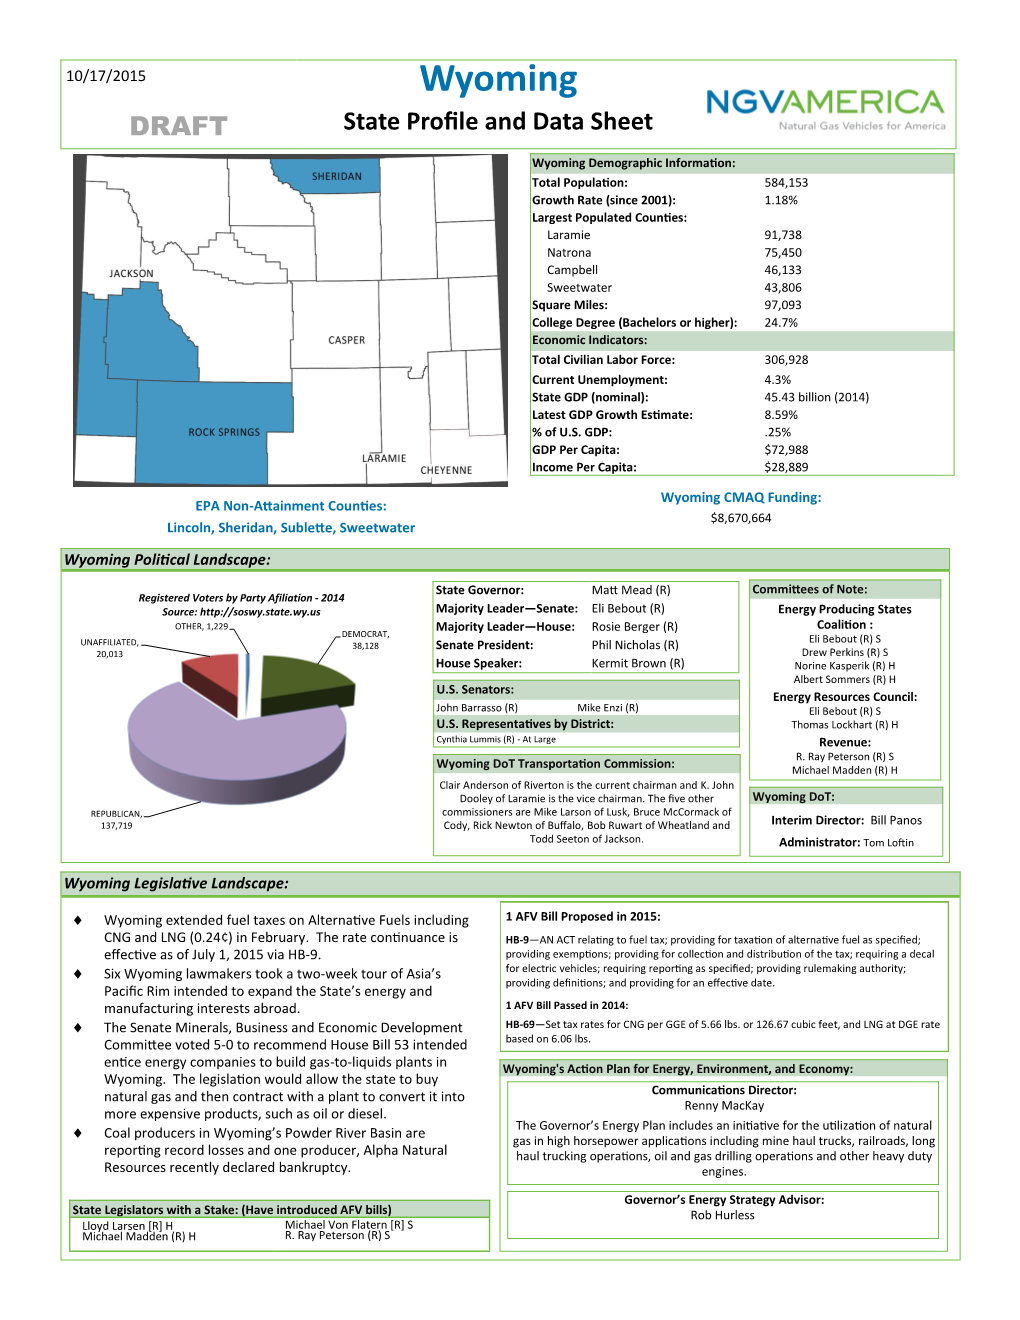 Wyoming DRAFT State Profile and Data Sheet